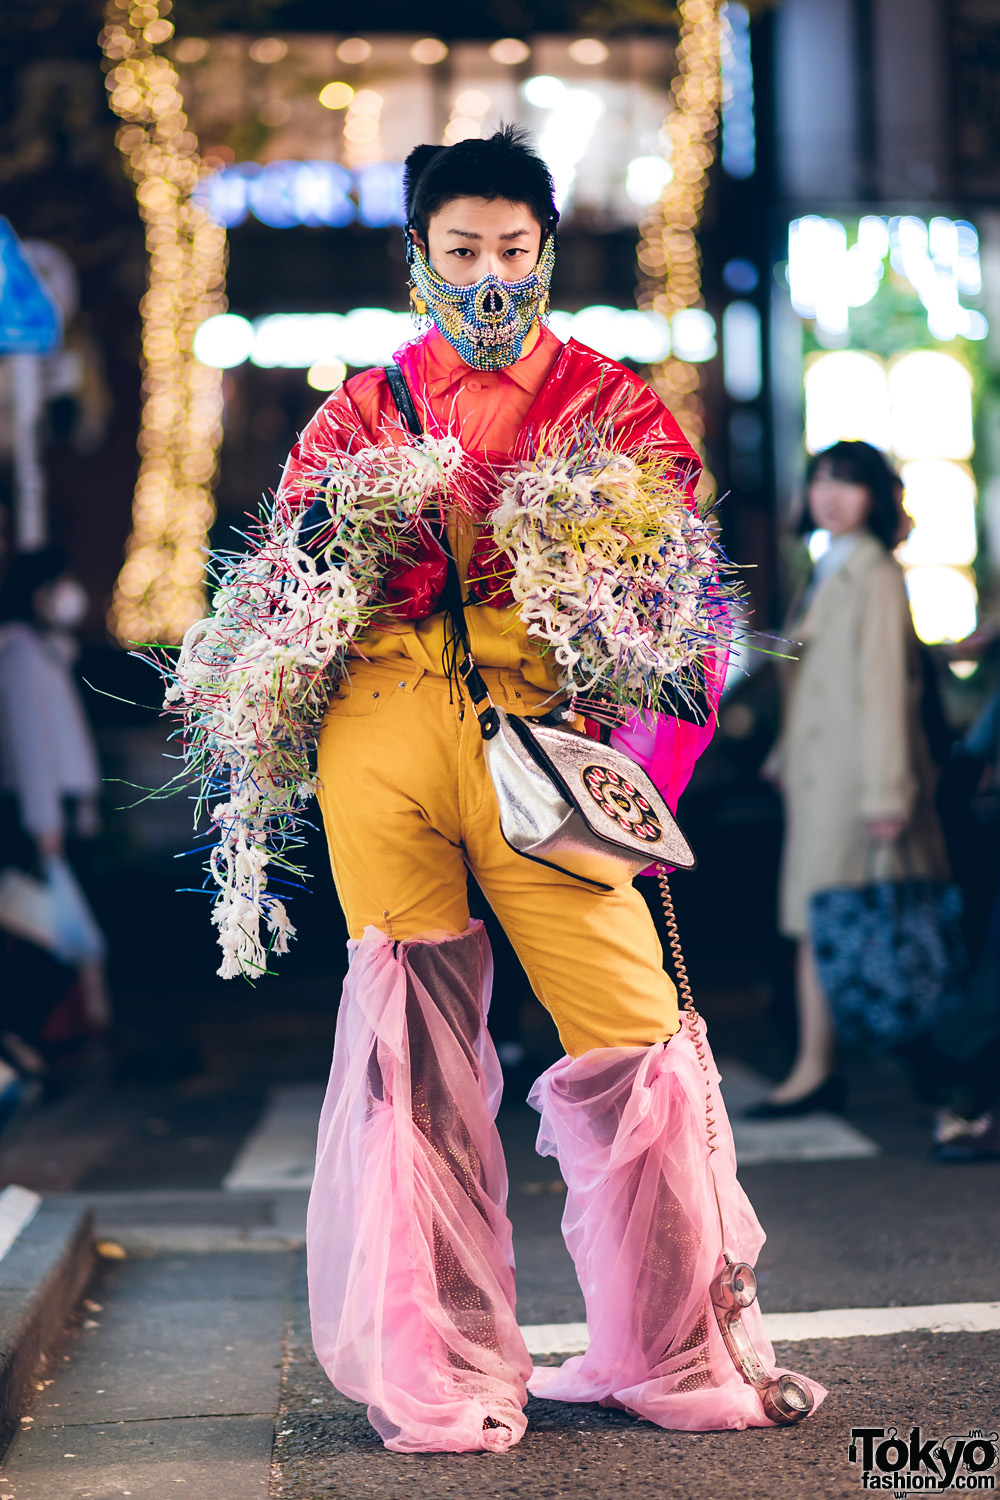 Japanese Handmade Avant-Garde Streetwear w/ Jeweled Mask, Vinyl Jacket Sleeves, Fuzzy Spiked Arm Warmers, Corduroy Pants, Fabric Wrapped Knee Boots & Prega Telephone Bag